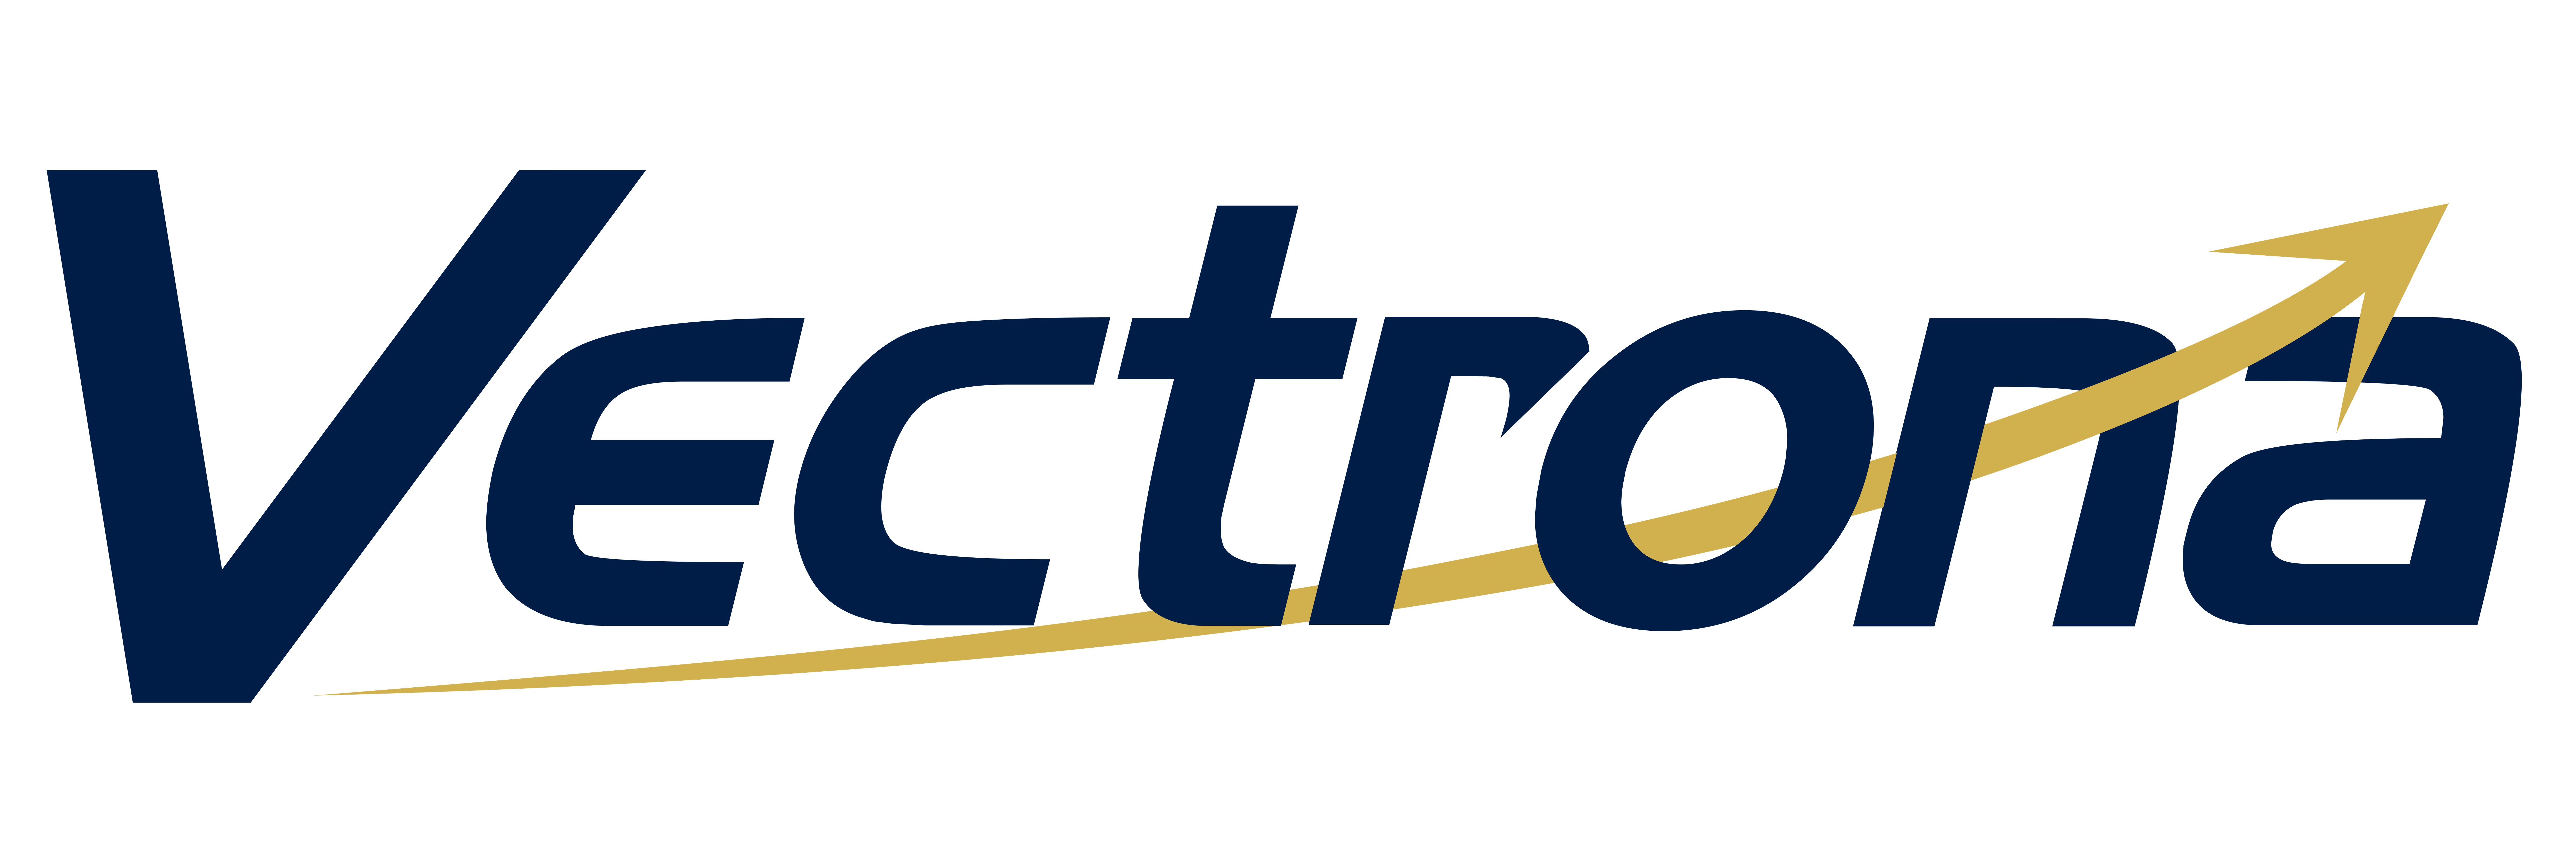 Vectrona, LLC